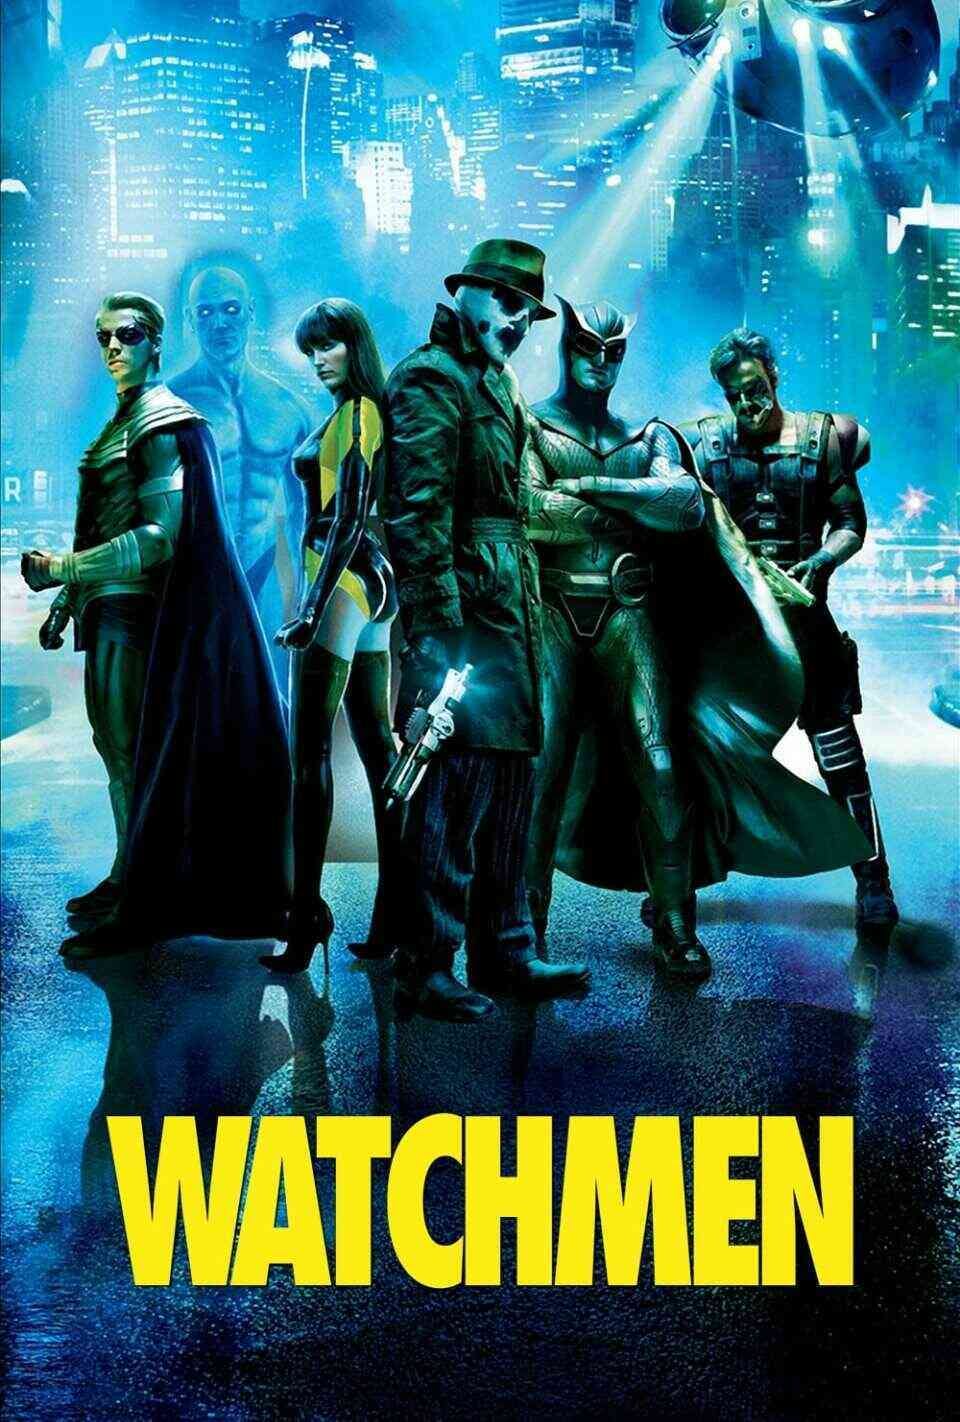 Read Watchmen screenplay (poster)